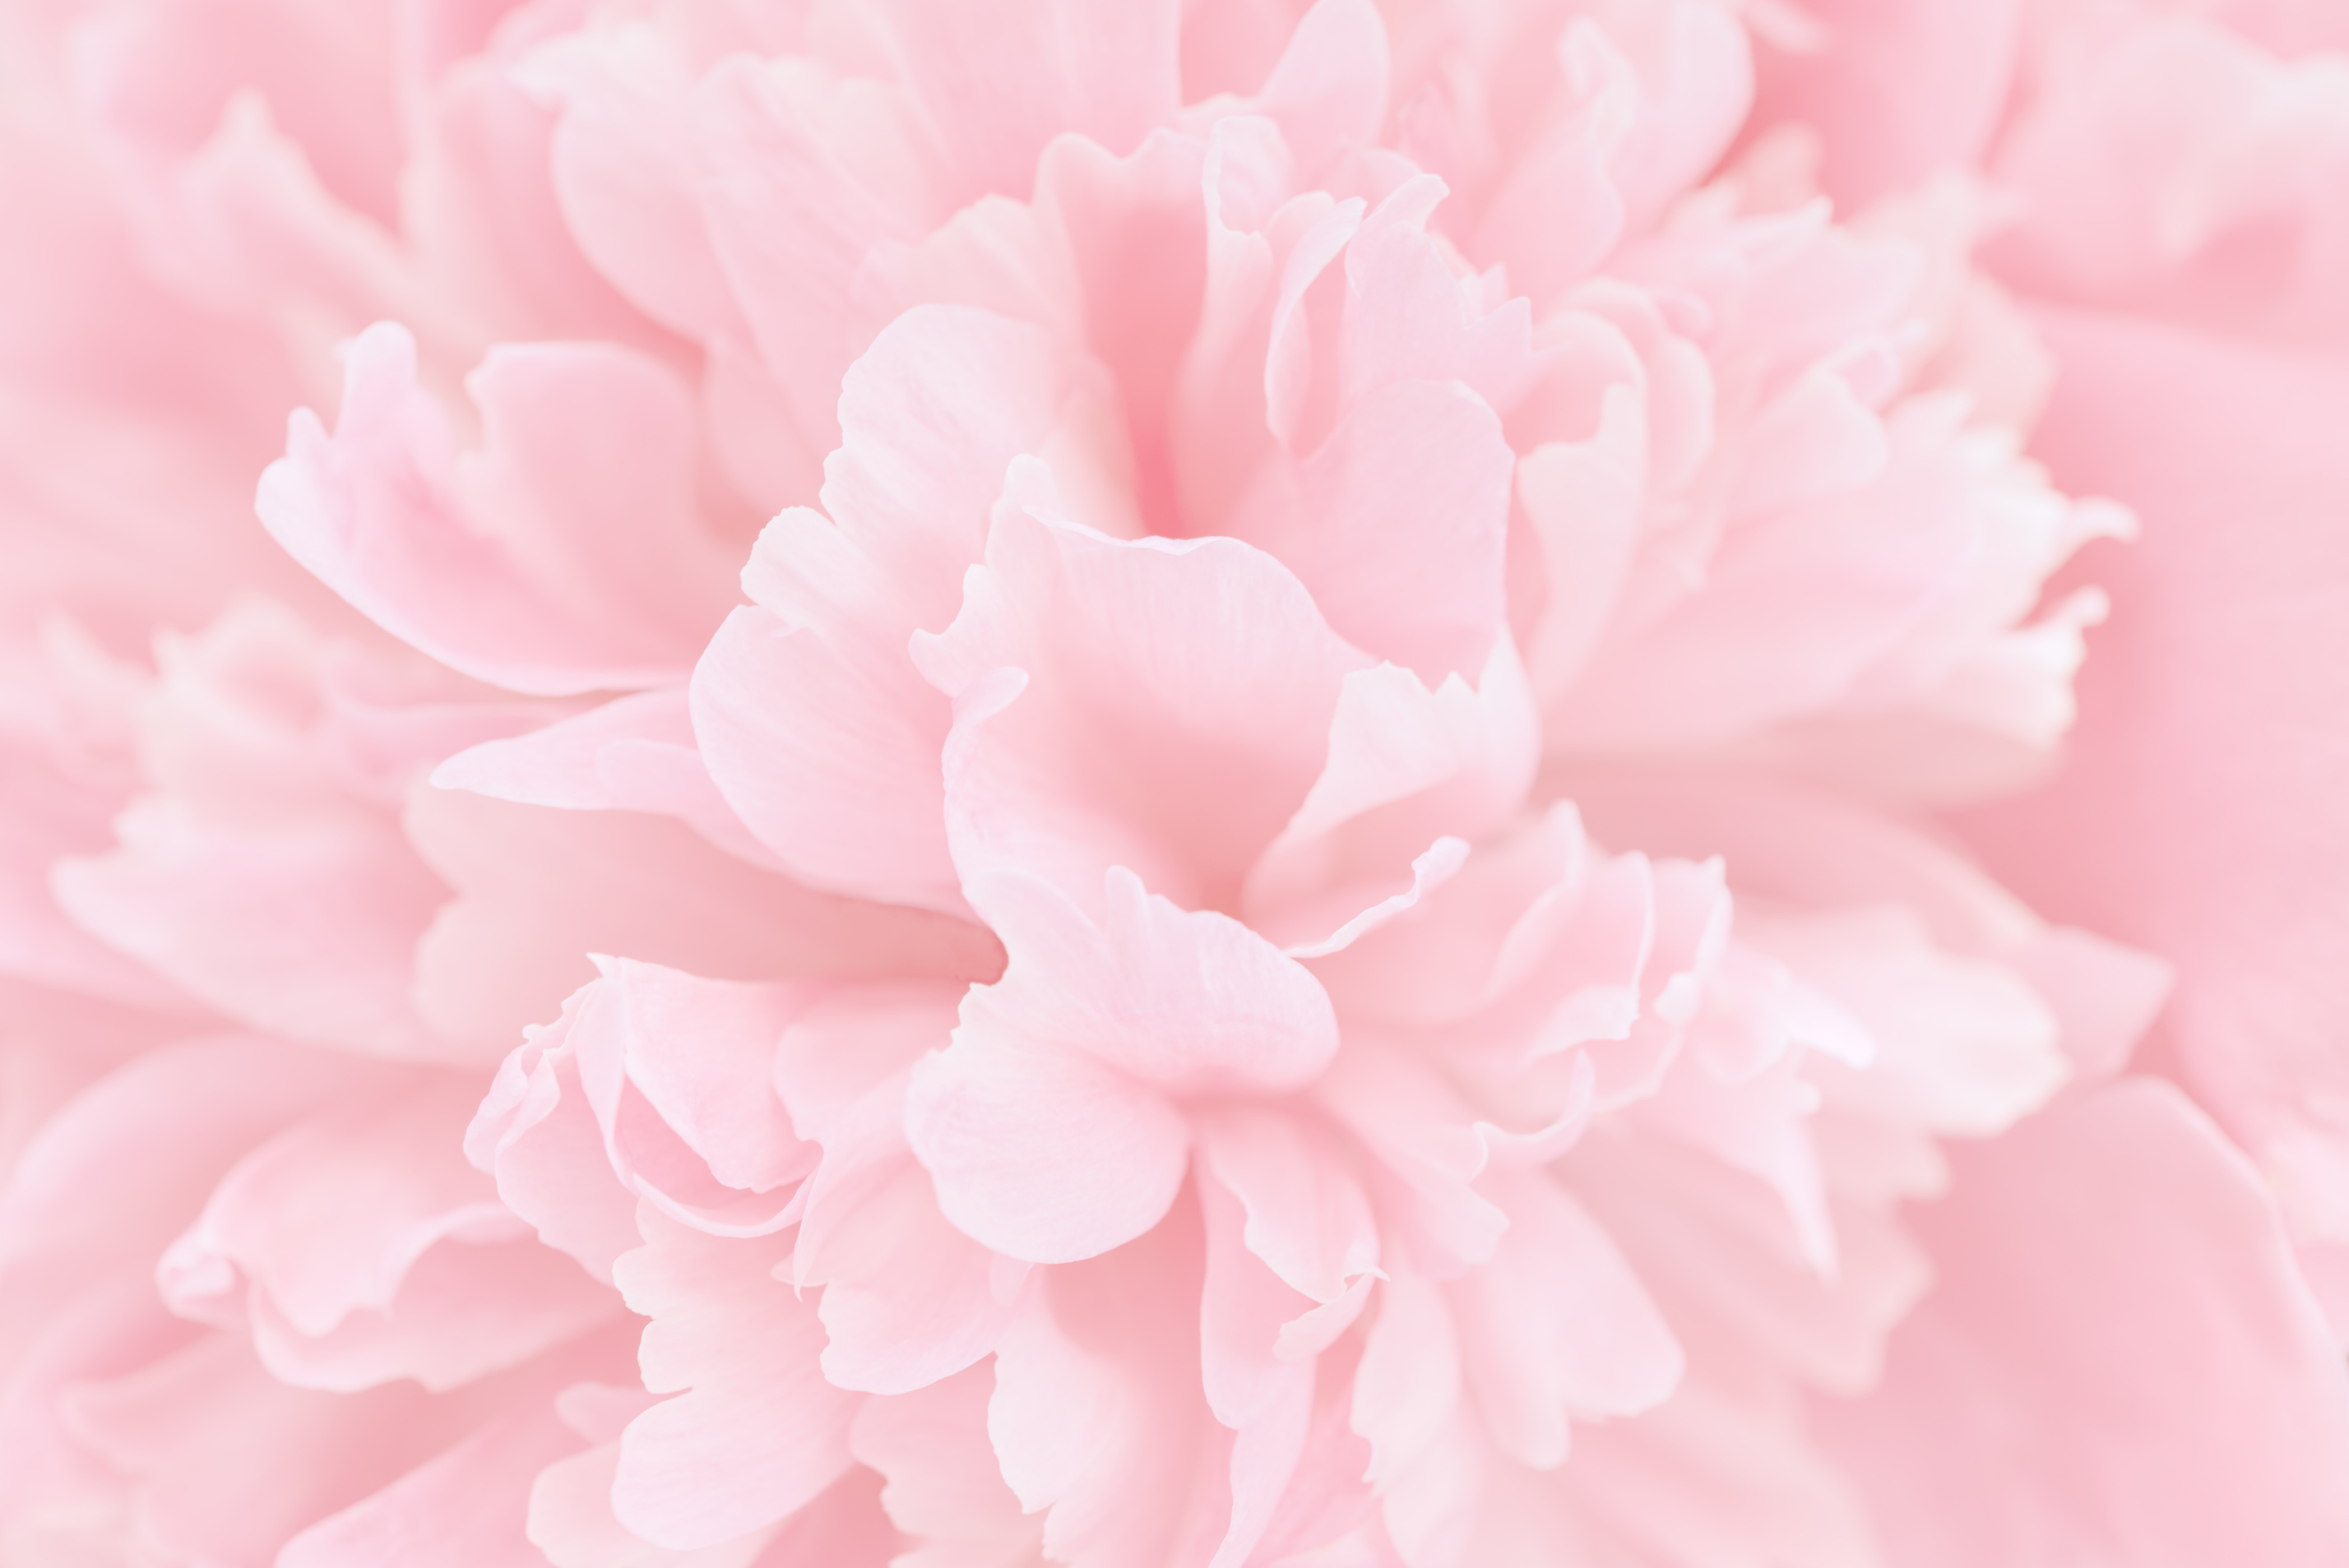 Pink Petals with Blurred Focus